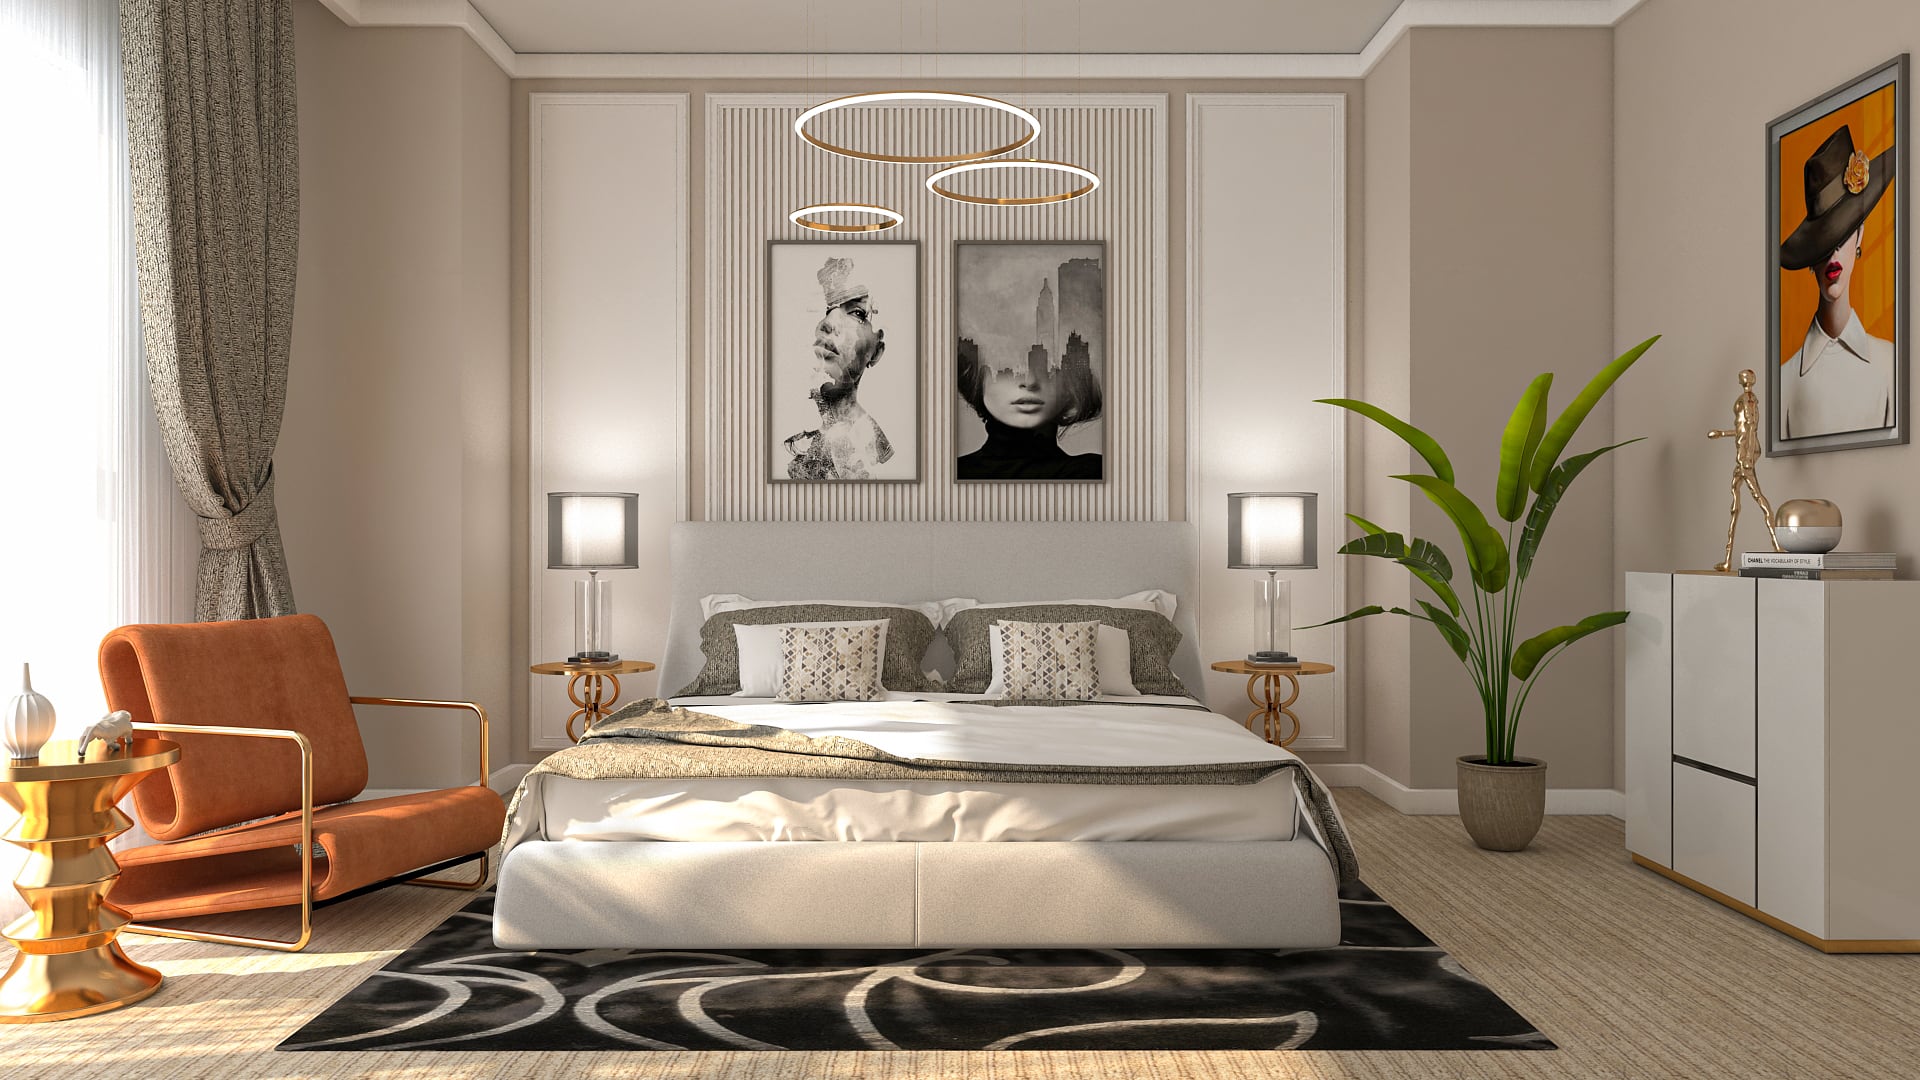 Modern guest bedroom ideas by Homilo